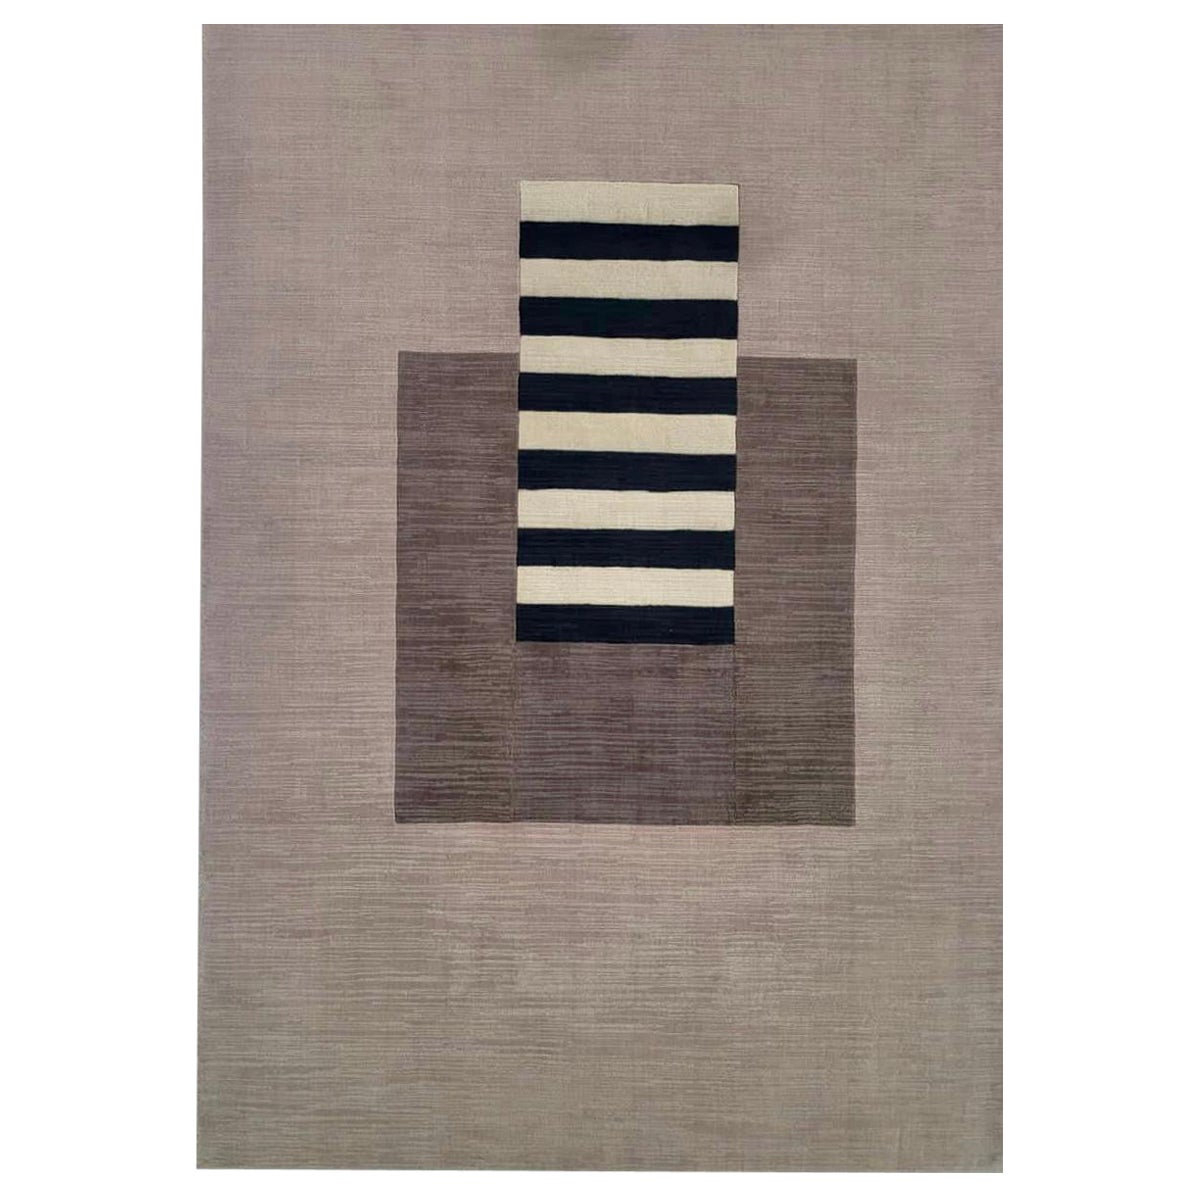  Brown, rug, handwoven, white black stripes, beige background 100pct wool carpet